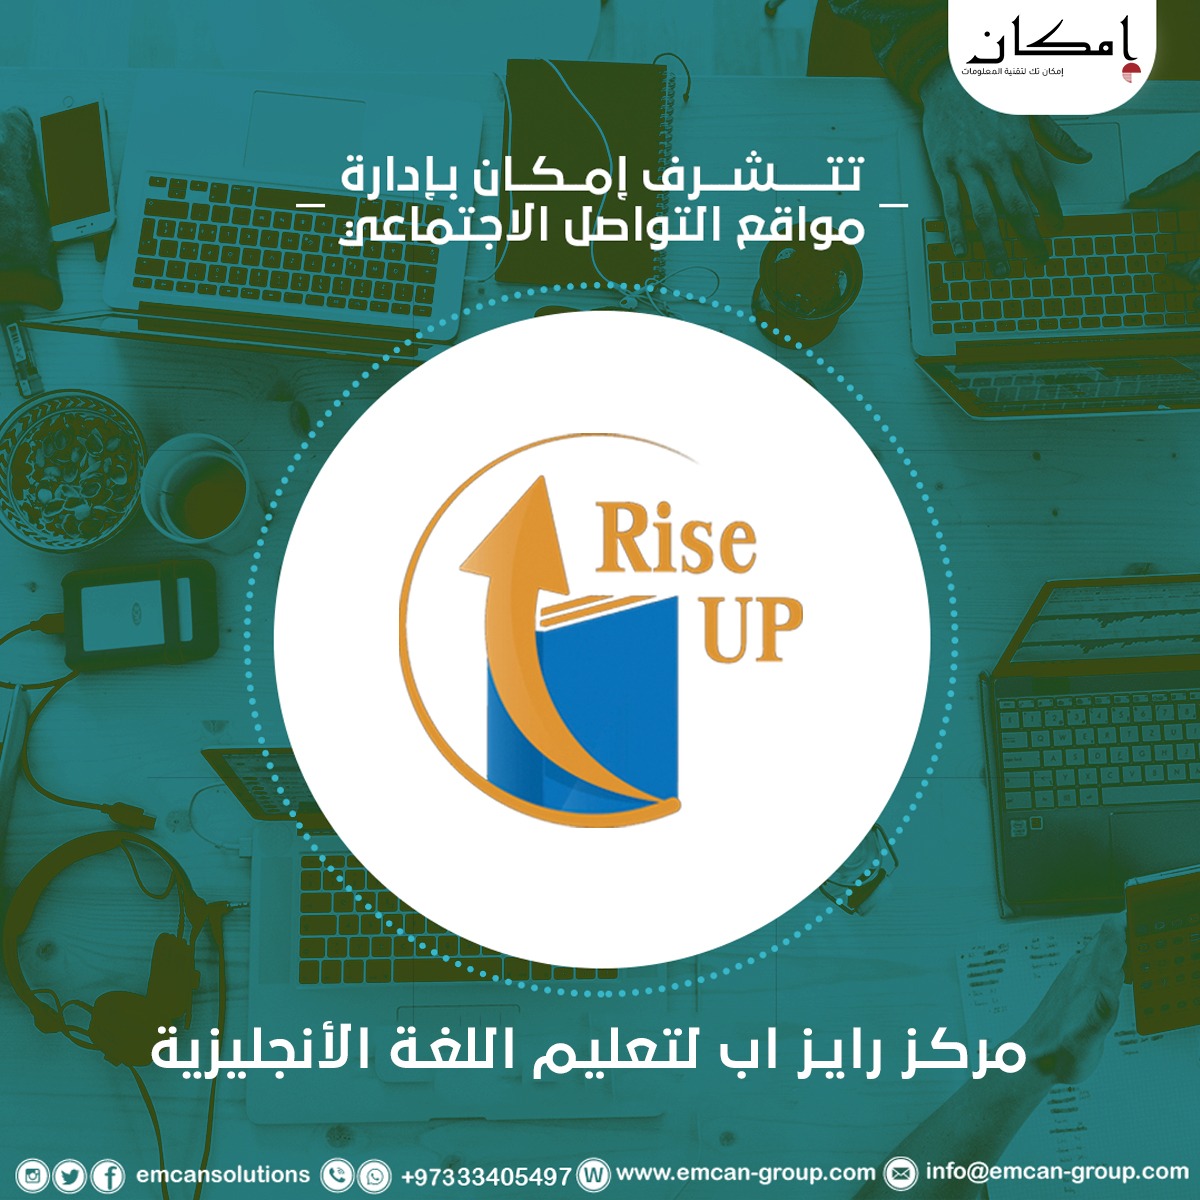 Social media management for RiseUp Center